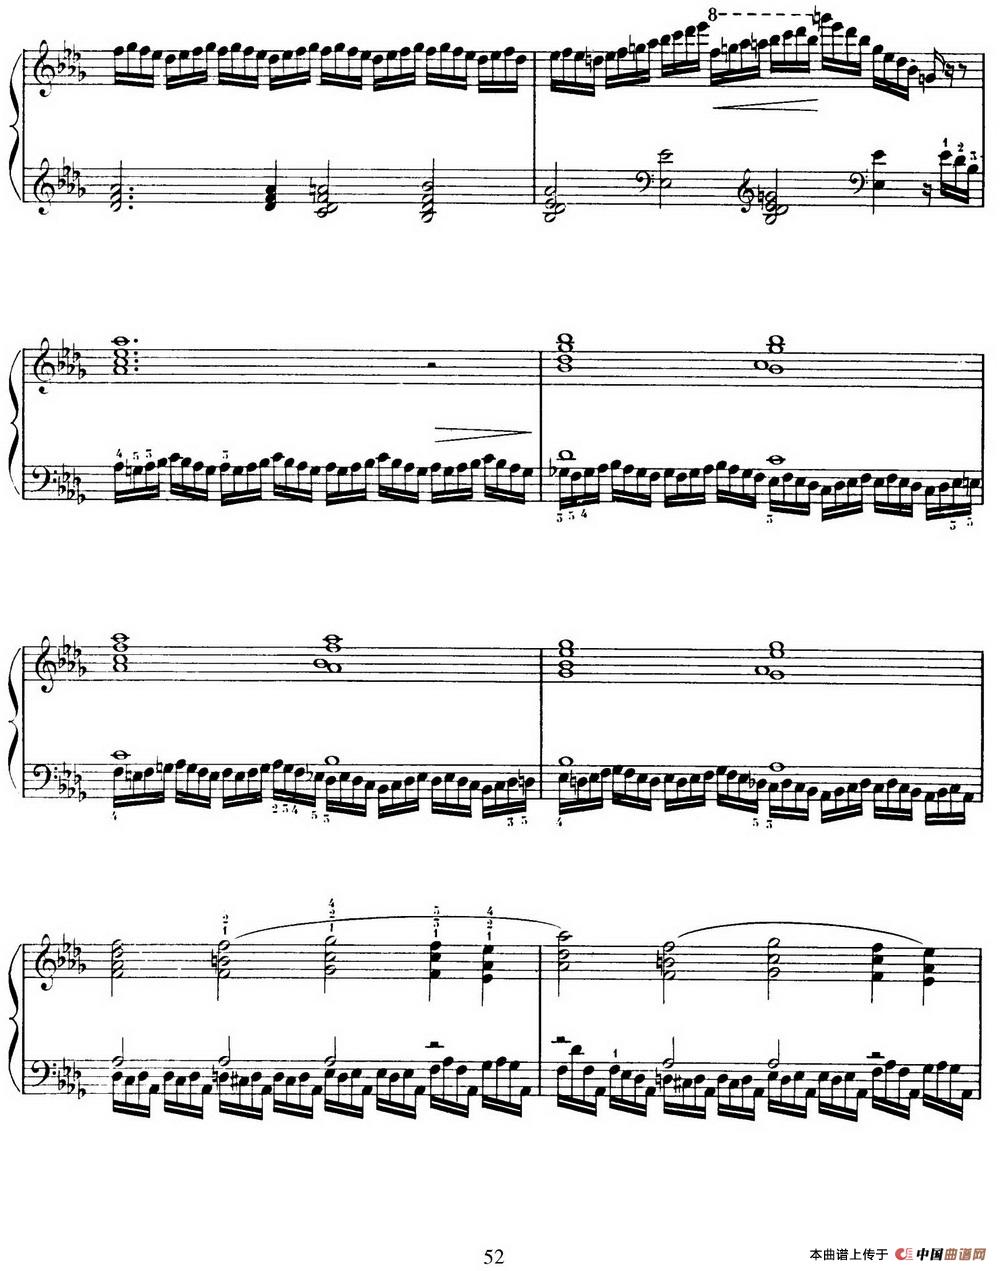 15 Etudes de Virtuosité Op.72 No.12（十五首钢琴练习曲之十二）(1)_052.jpg